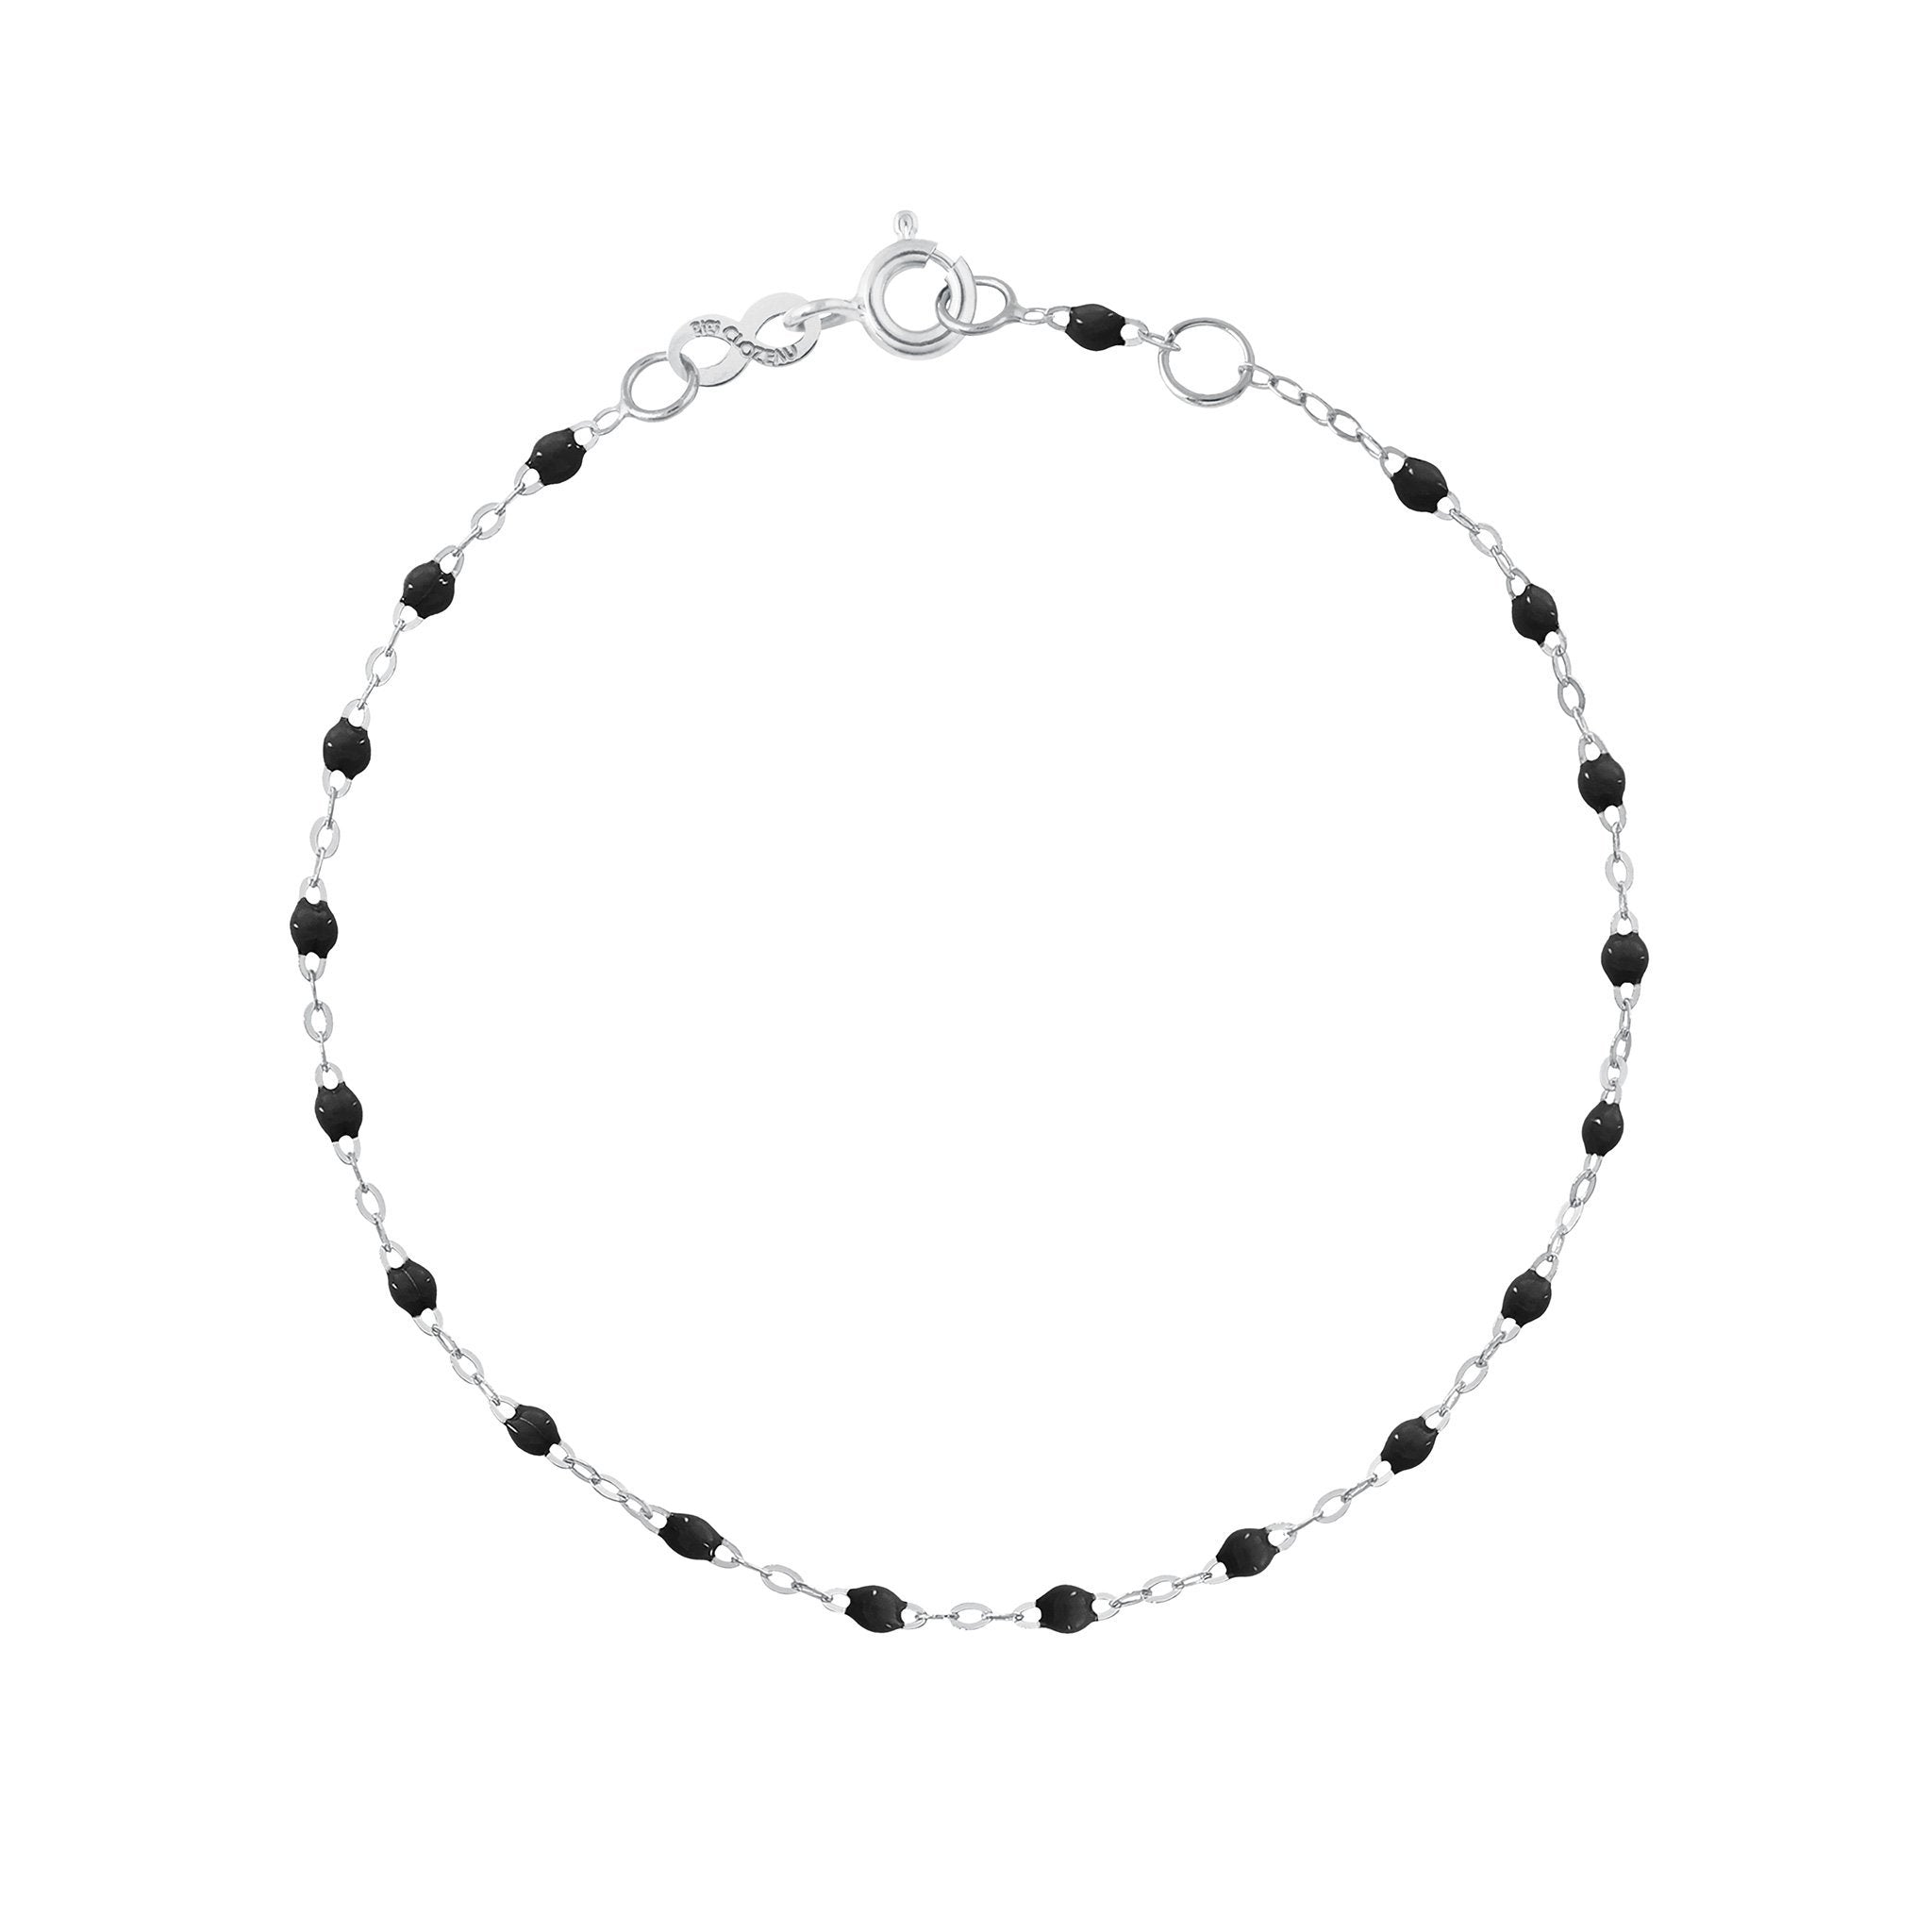 Bracelet noir Classique Gigi, or blanc, 18 cm classique gigi Référence :  b3gi001g2018xx -1